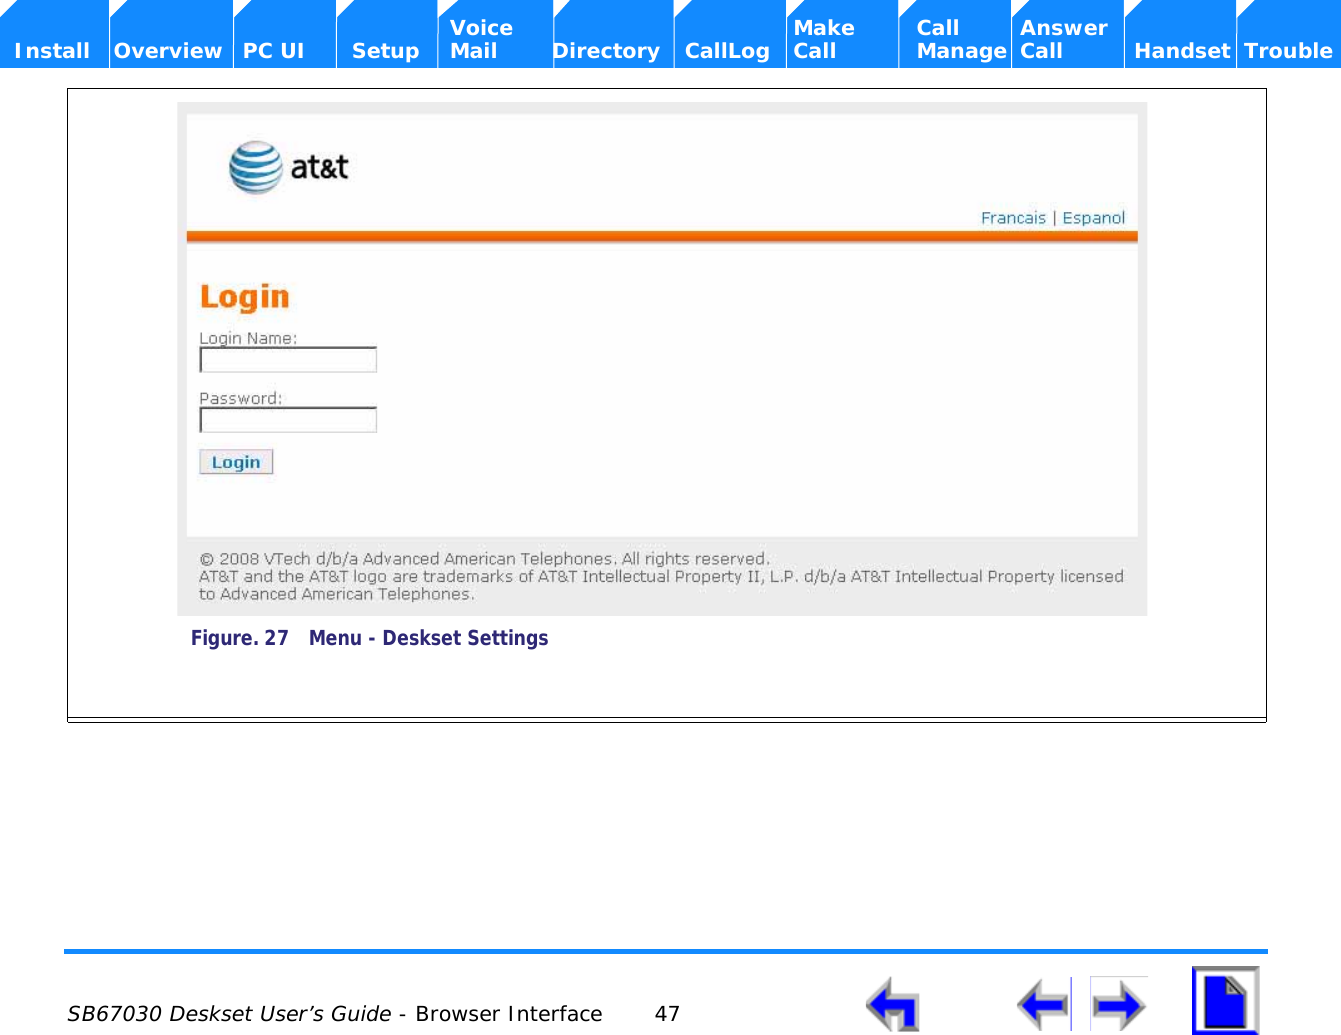  SB67030 Deskset User’s Guide - Browser Interface 47    Voice Make Call Answer  Install Overview PC UI Setup Mail Directory CallLog Call Manage Call Handset TroubleFigure. 27 Menu - Deskset Settings